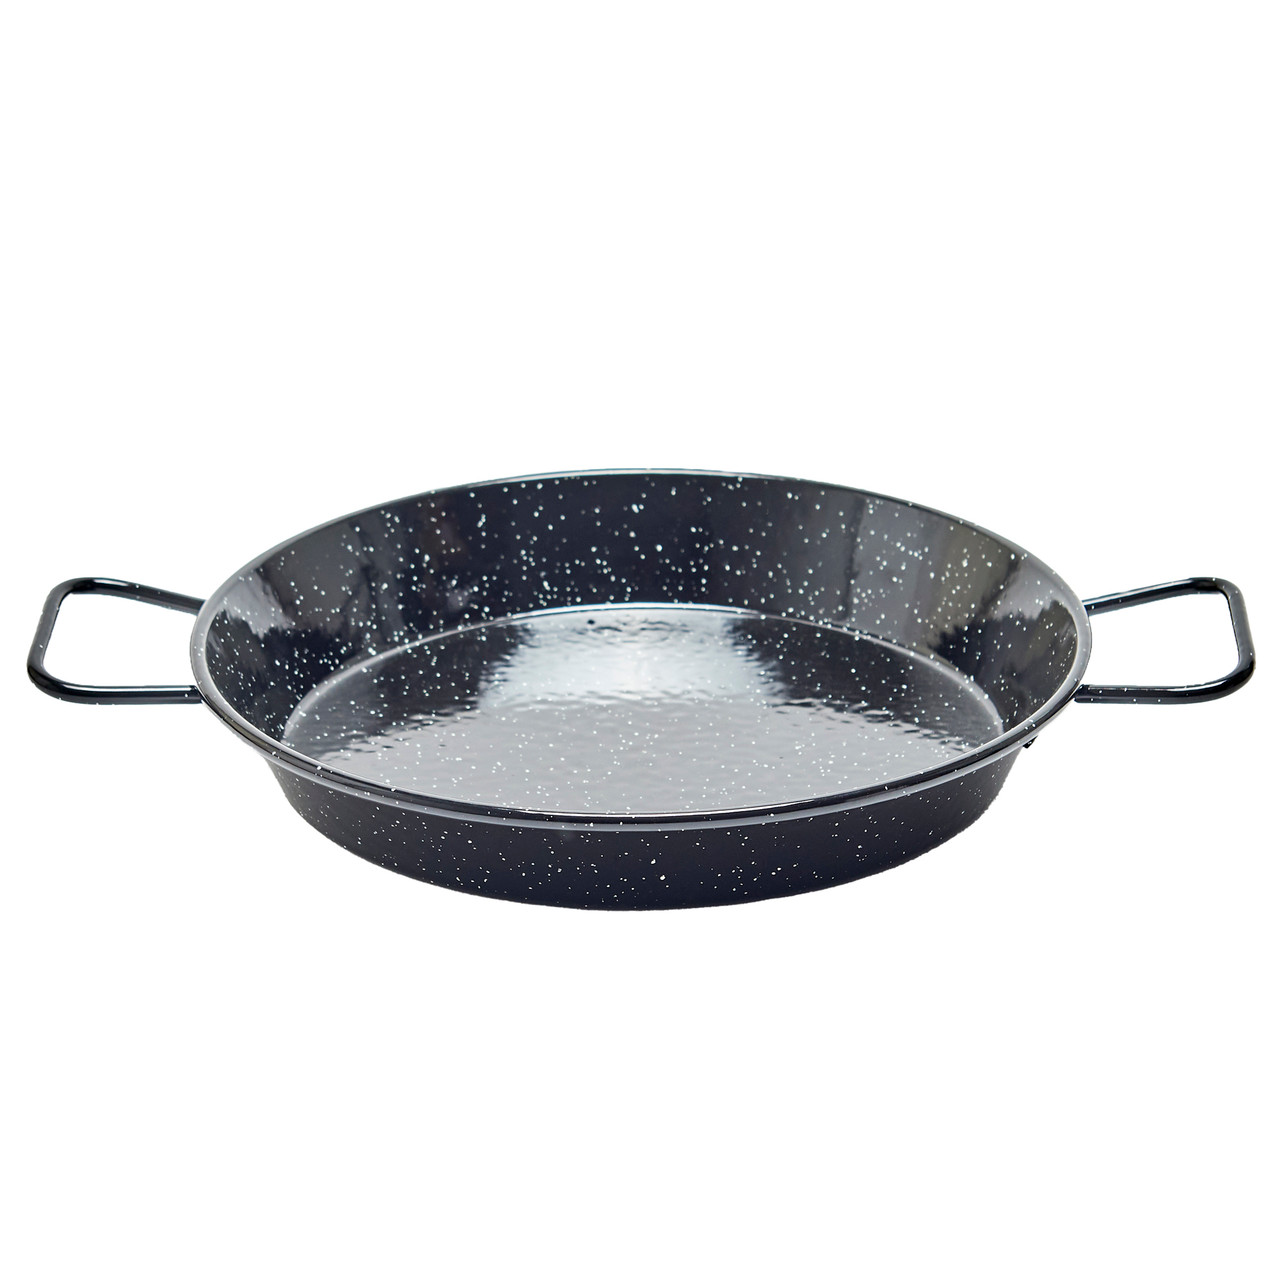 18-Inch Enameled Steel Spanish Paella Pan